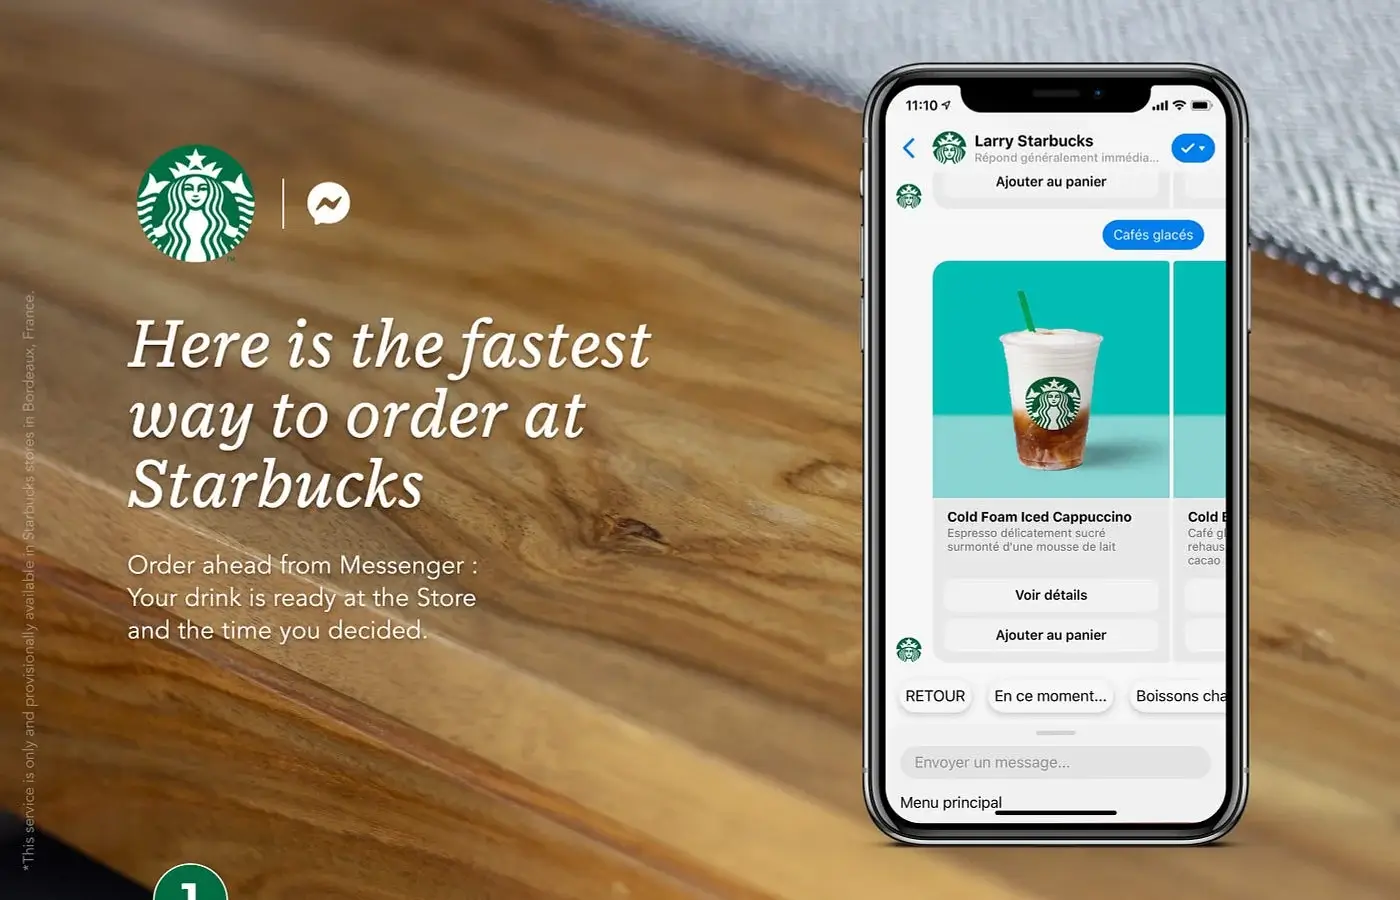 Starbucks customer service chatbot